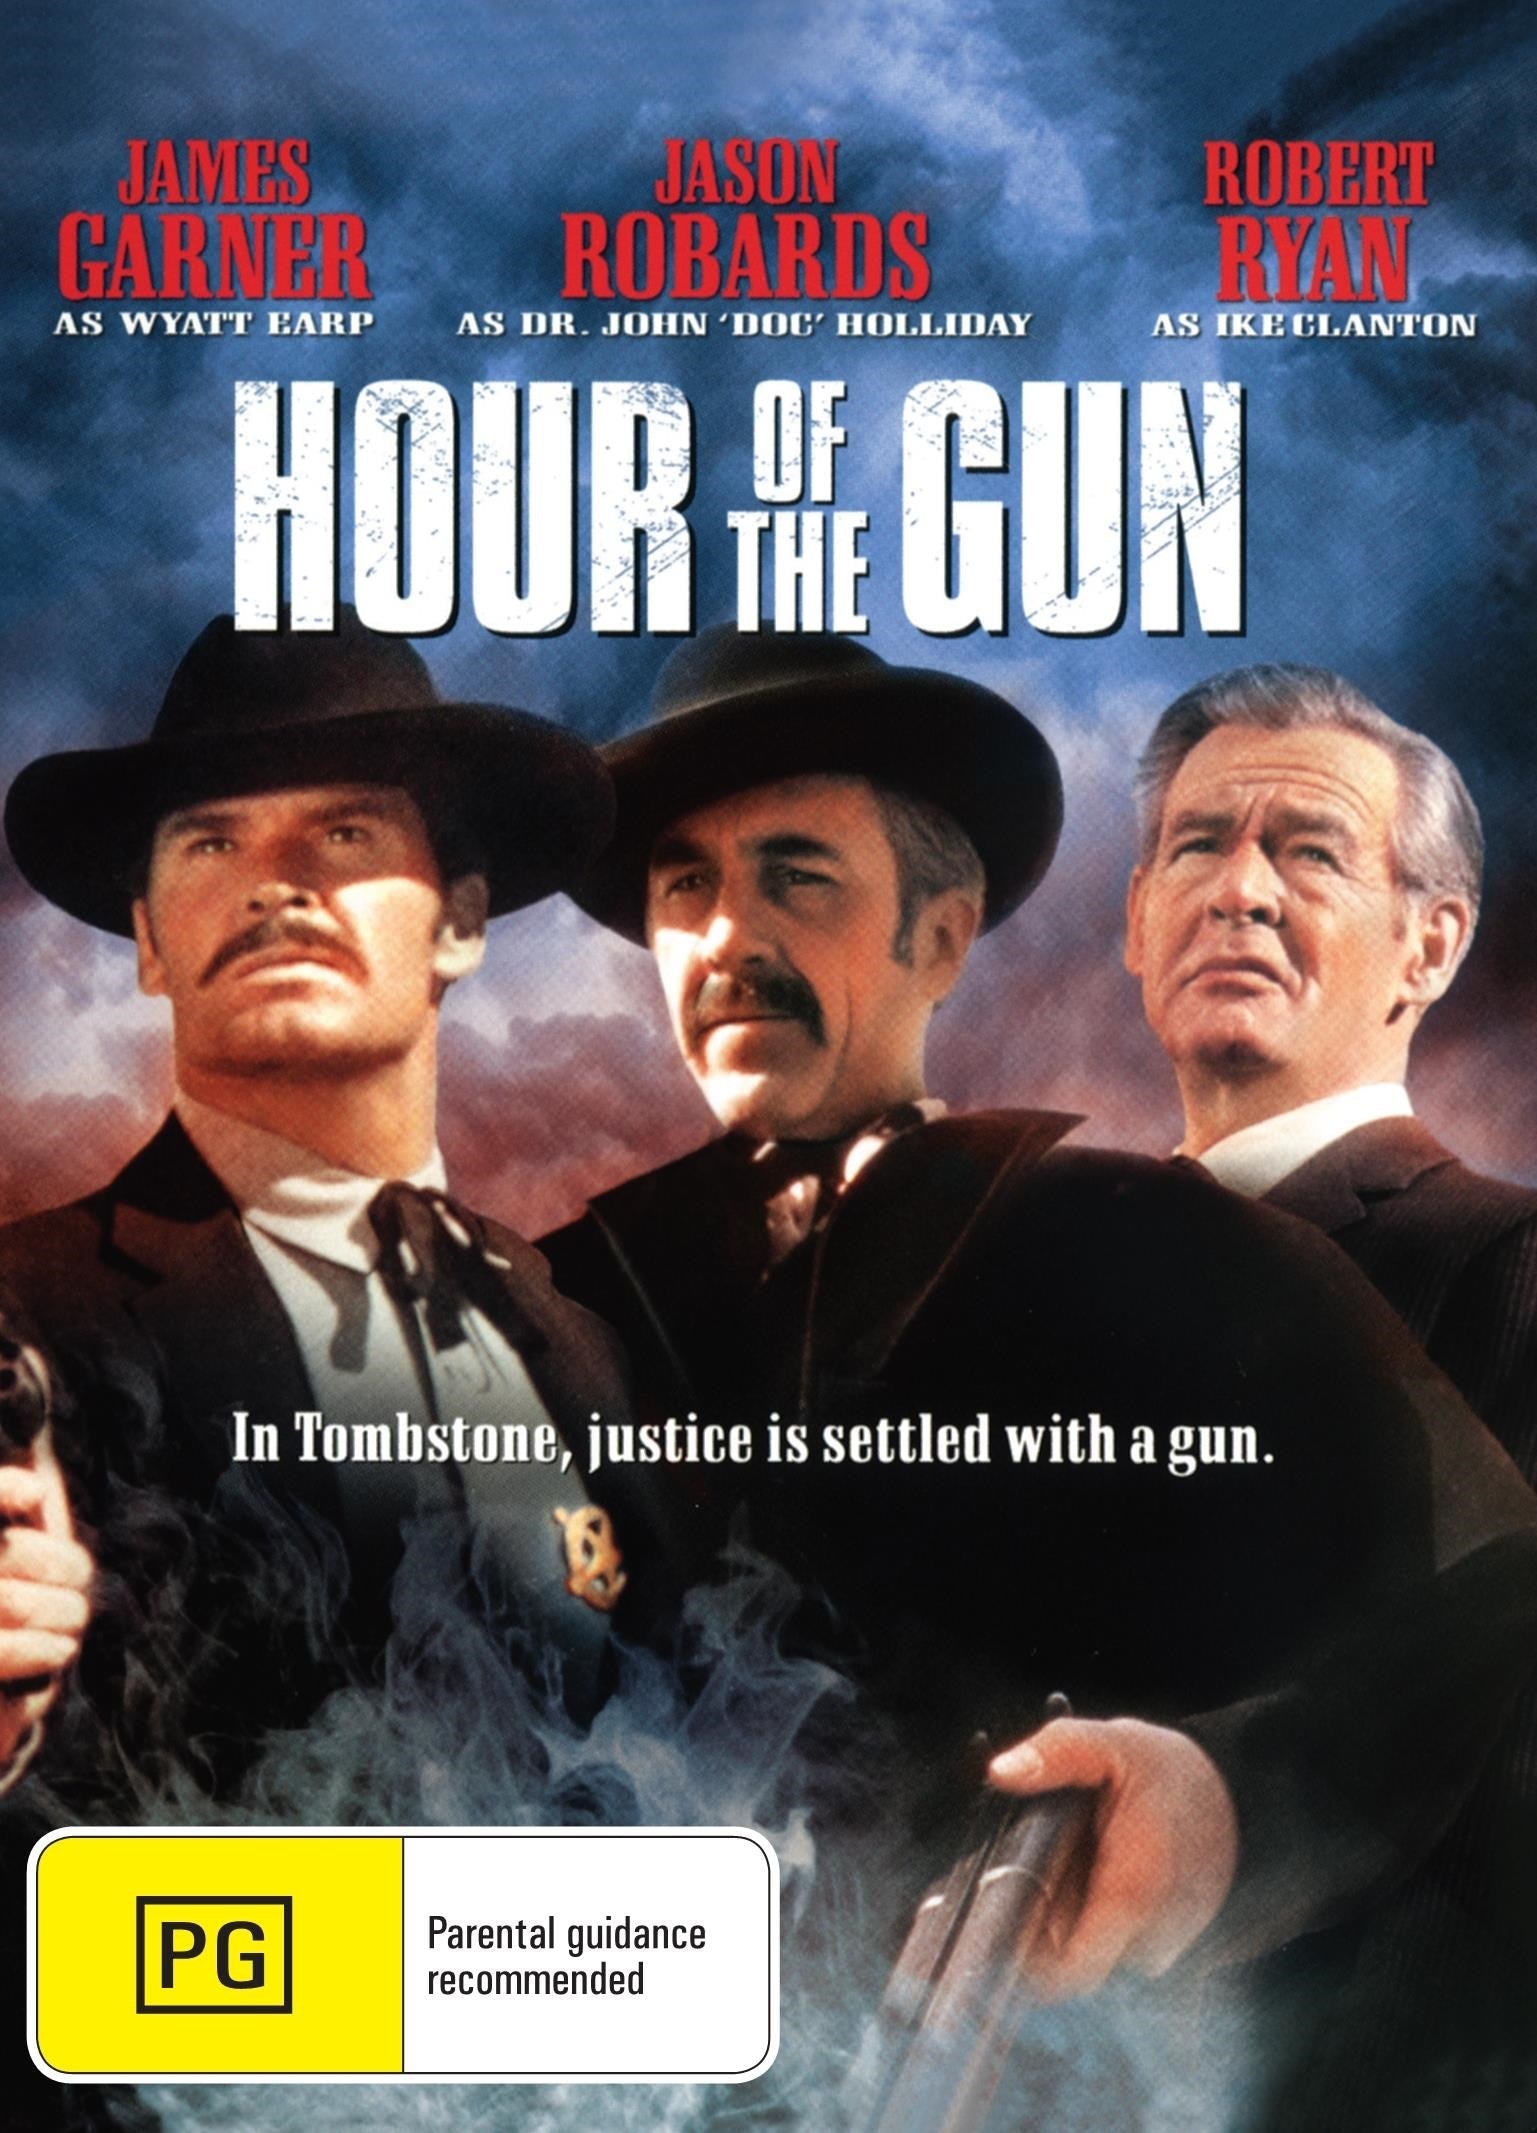 Hour of the Gun rareandcollectibledvds